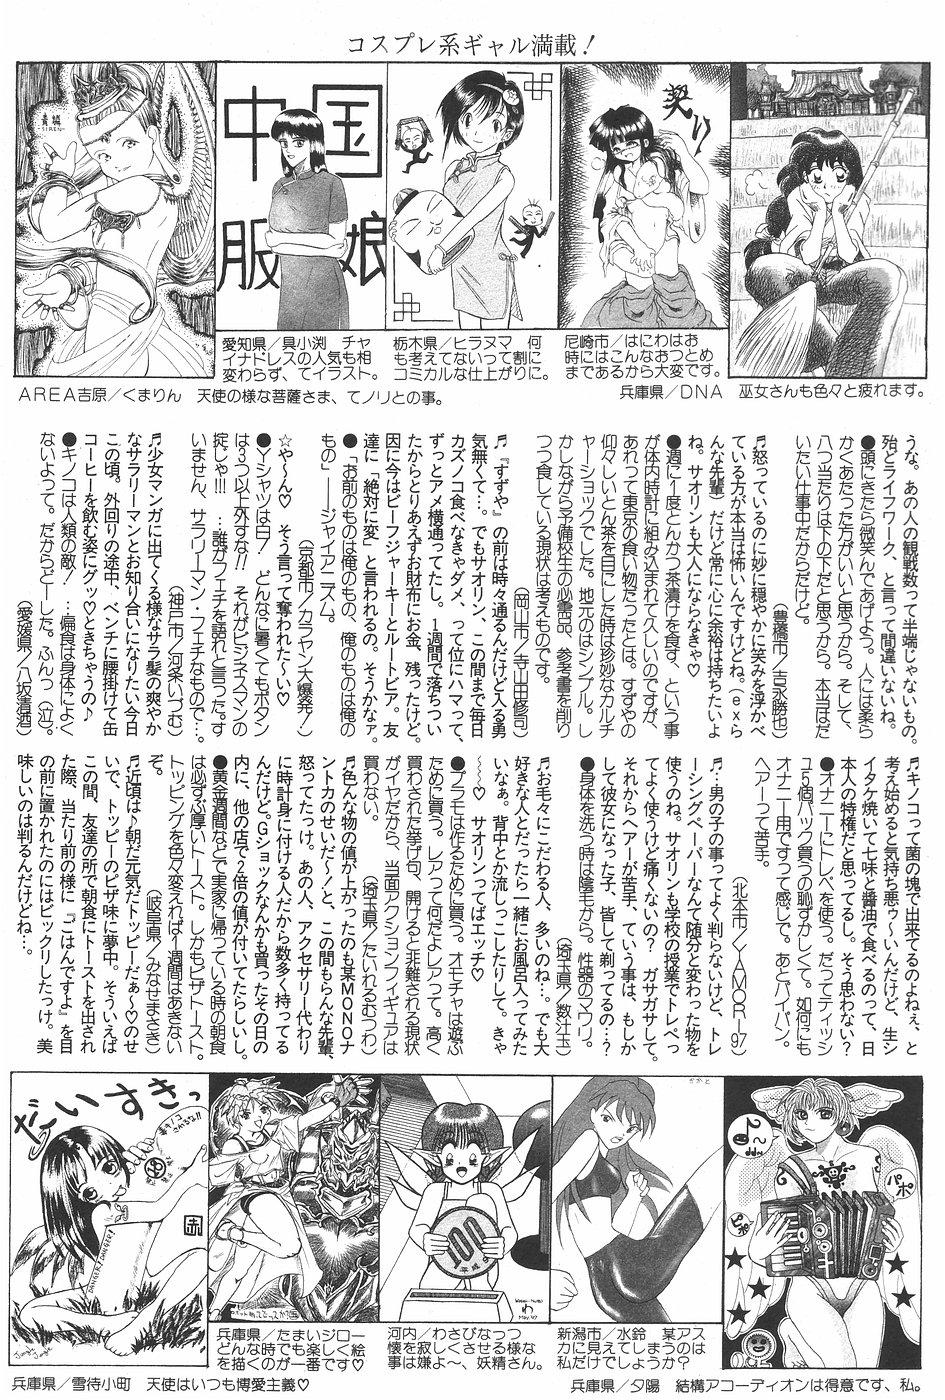 Manga Hotmilk 1997-07 172